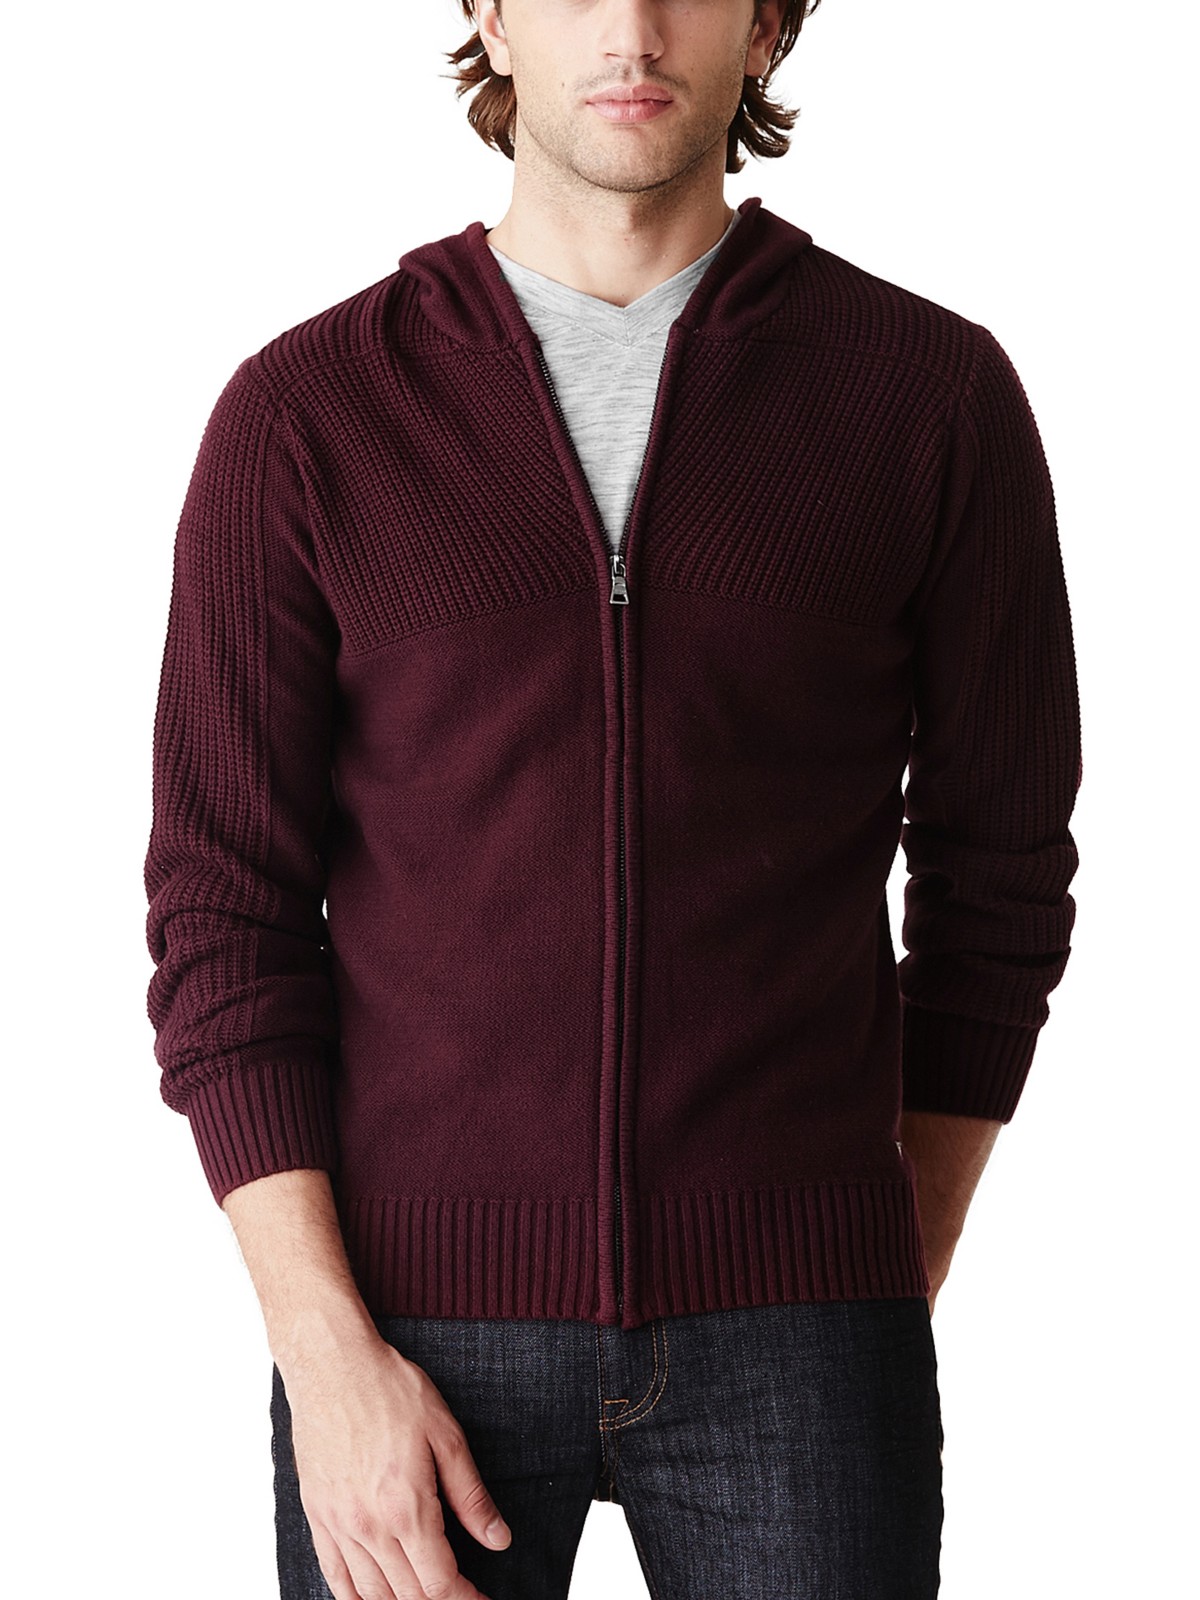 GUESS Men's Sutton Zip-Up Sweater Hoodie | eBay